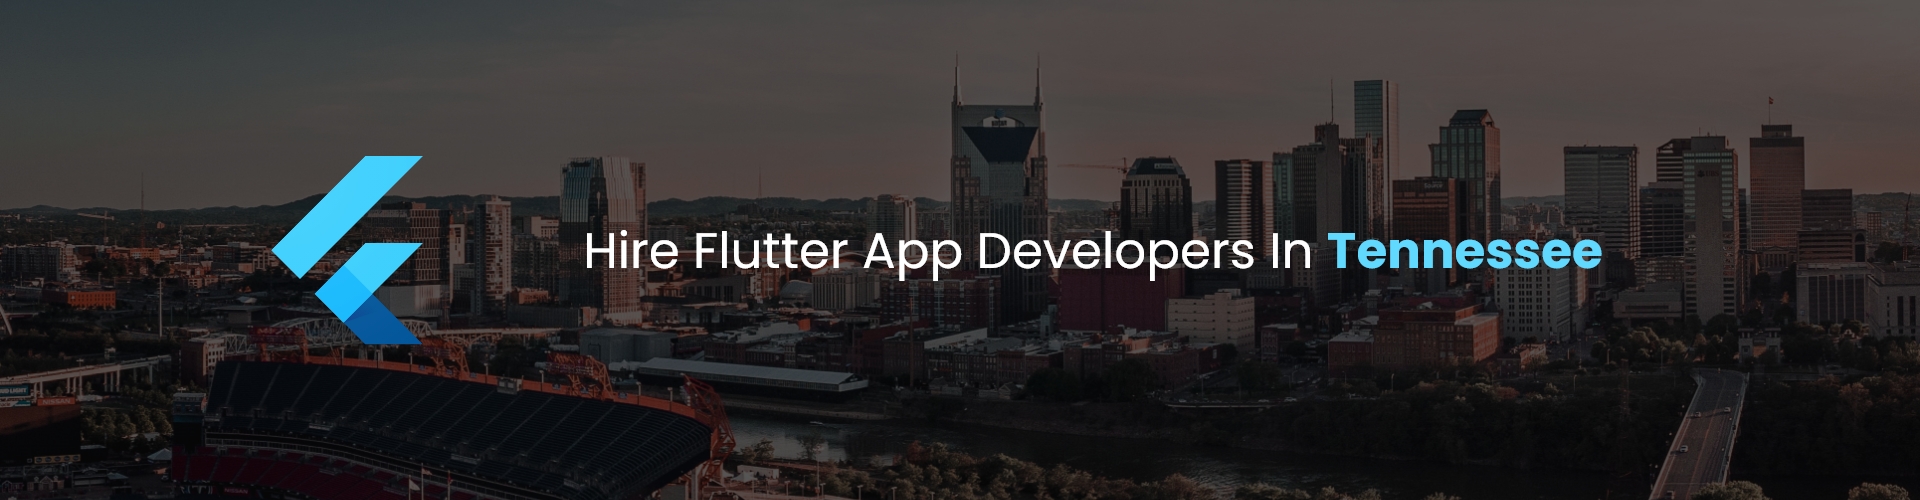 flutter app developers in tennessee 1